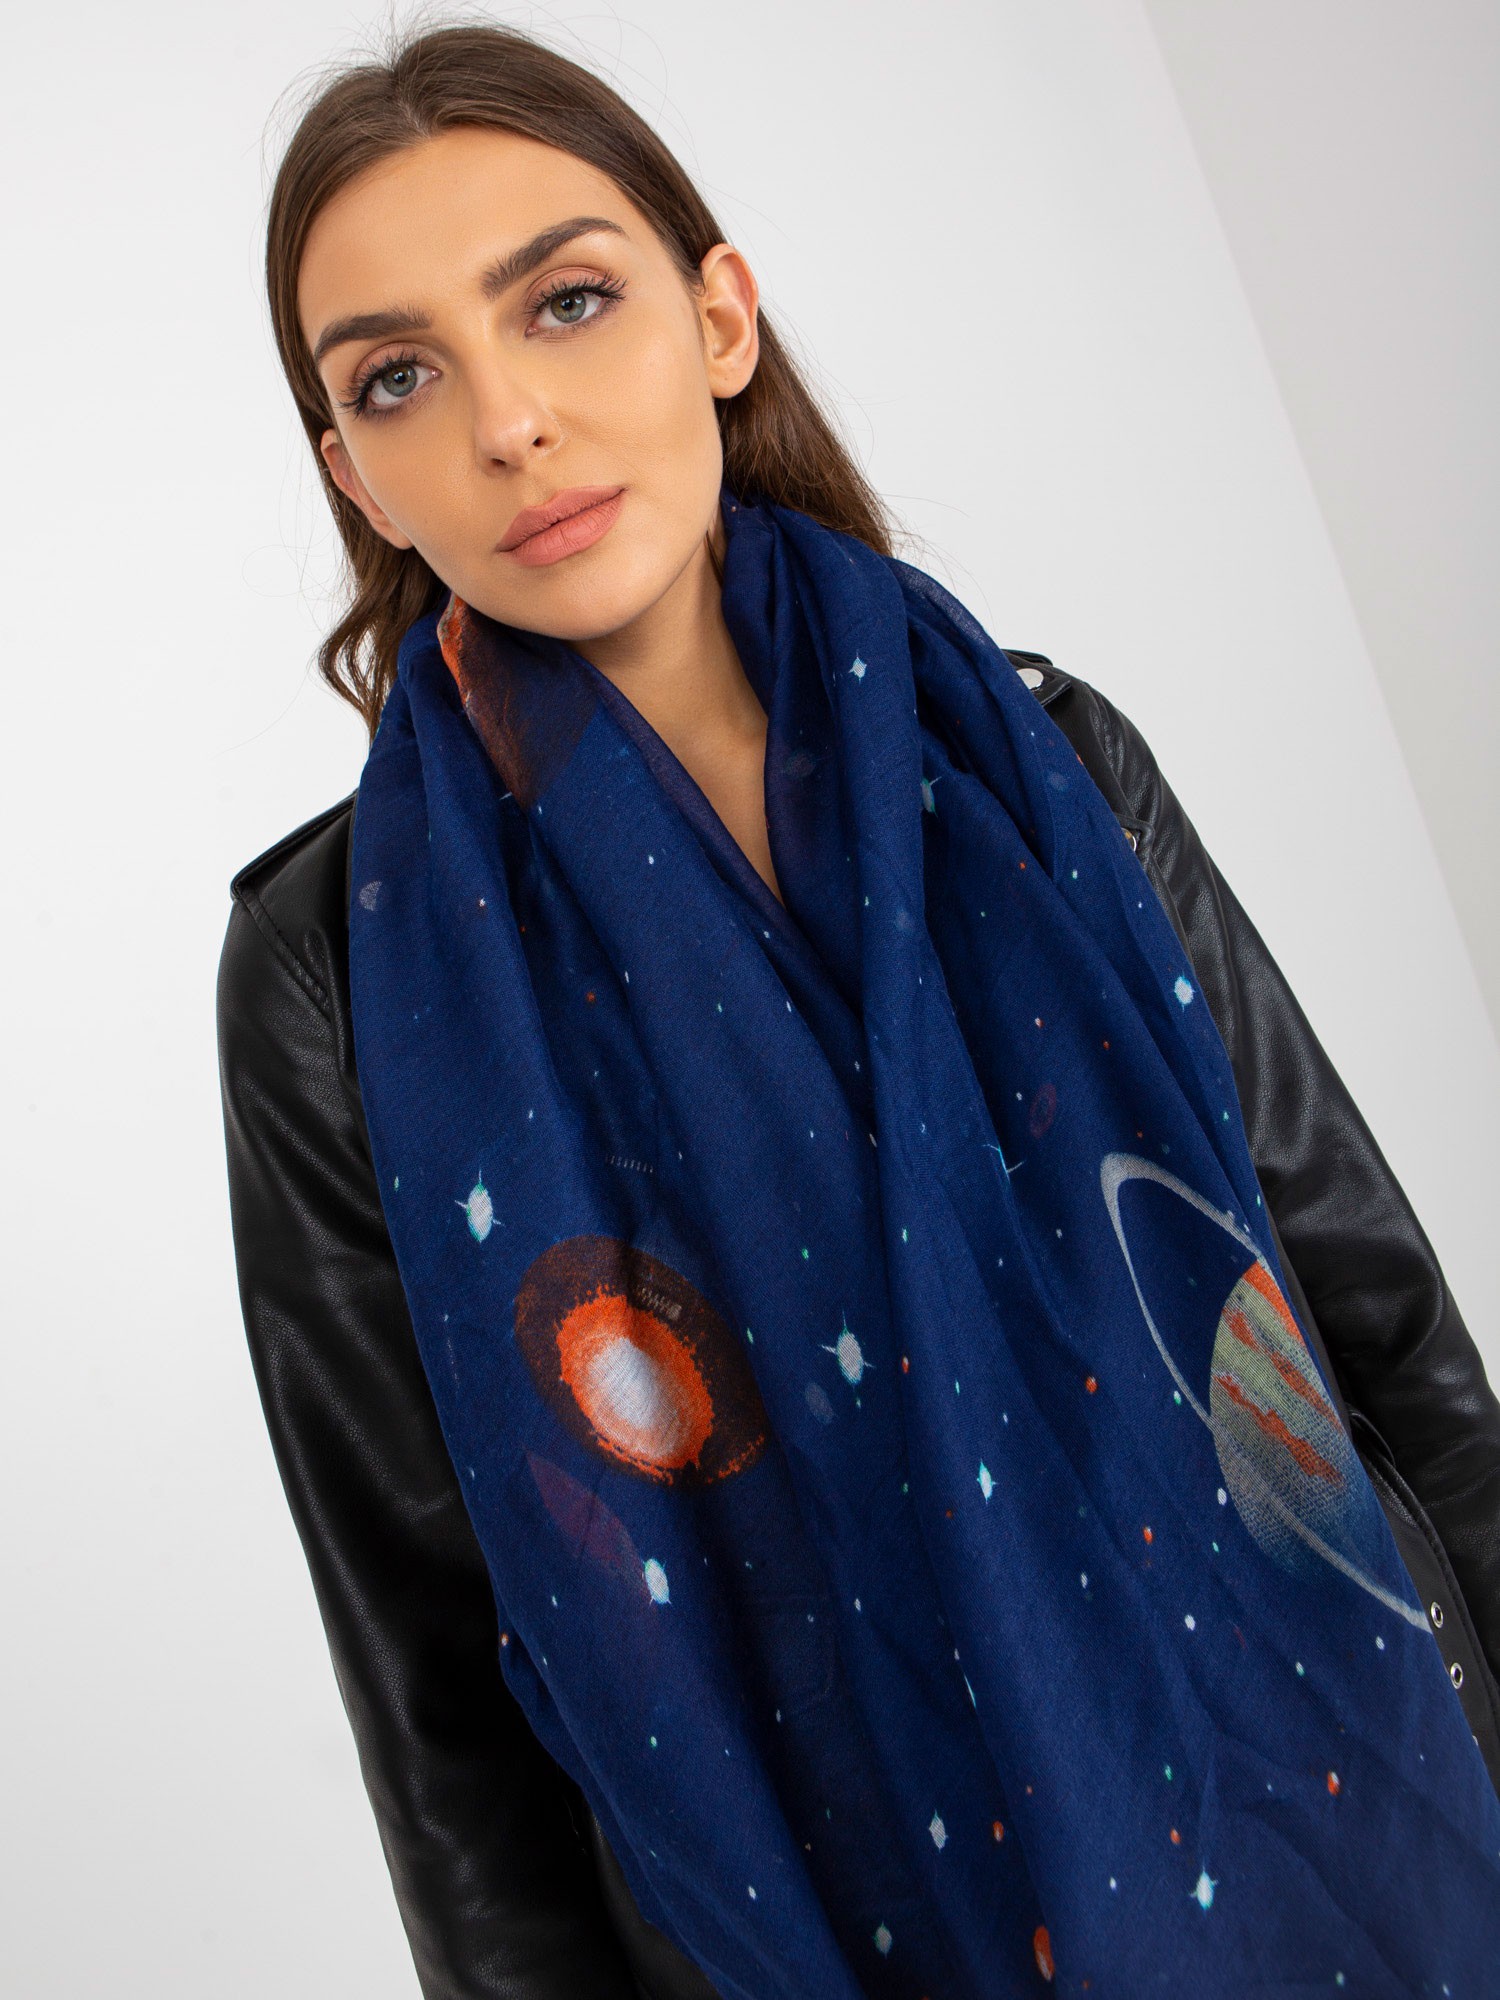 Dark blue scarf with prints